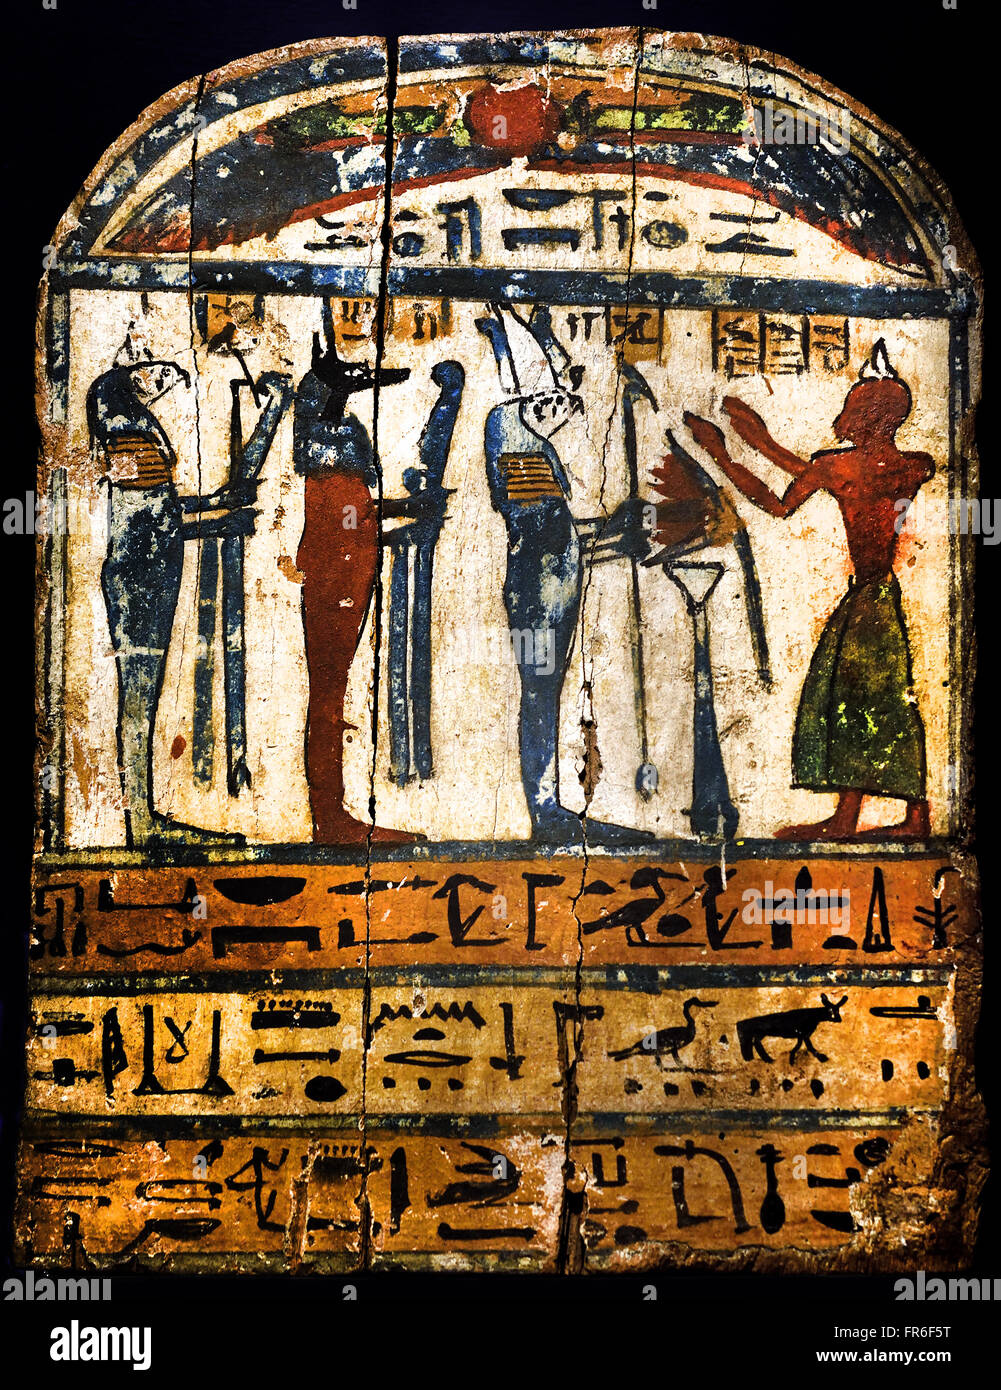 Estela Wenamun 1075 BC O 925 BC Tebas jeroglíficos egipcios Egipto Foto de stock